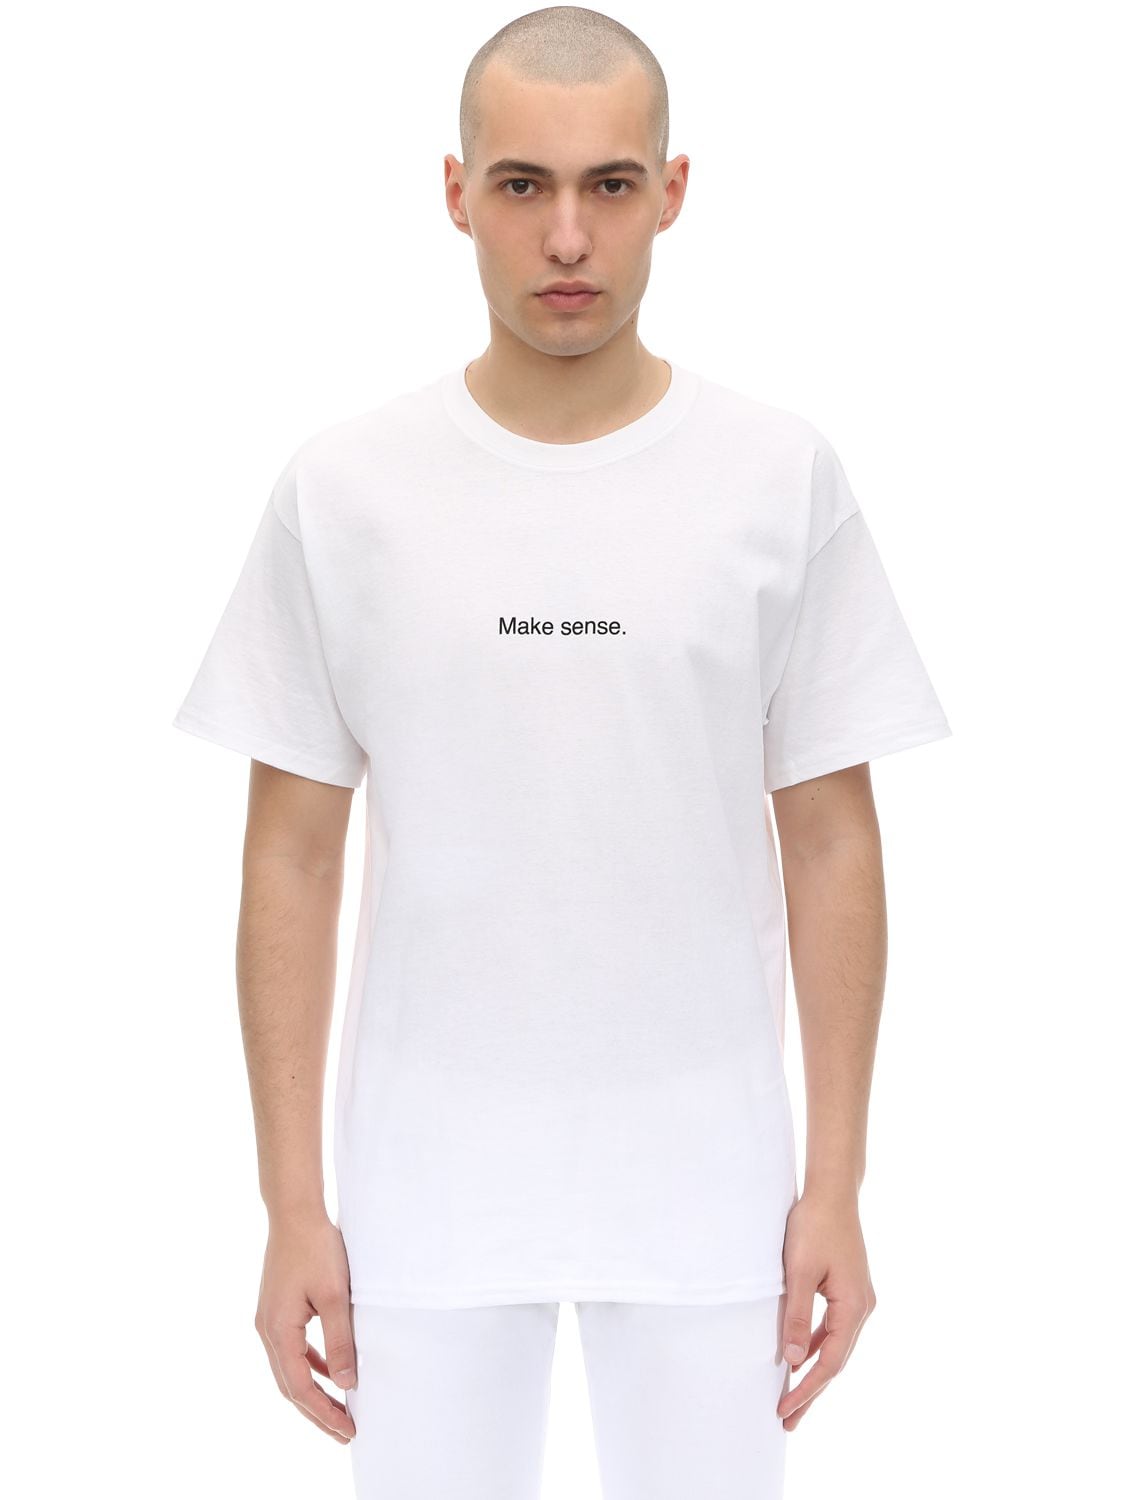 Famt - Fuck Art Make Tees Make Sense Cotton Jersey T-shirt In White